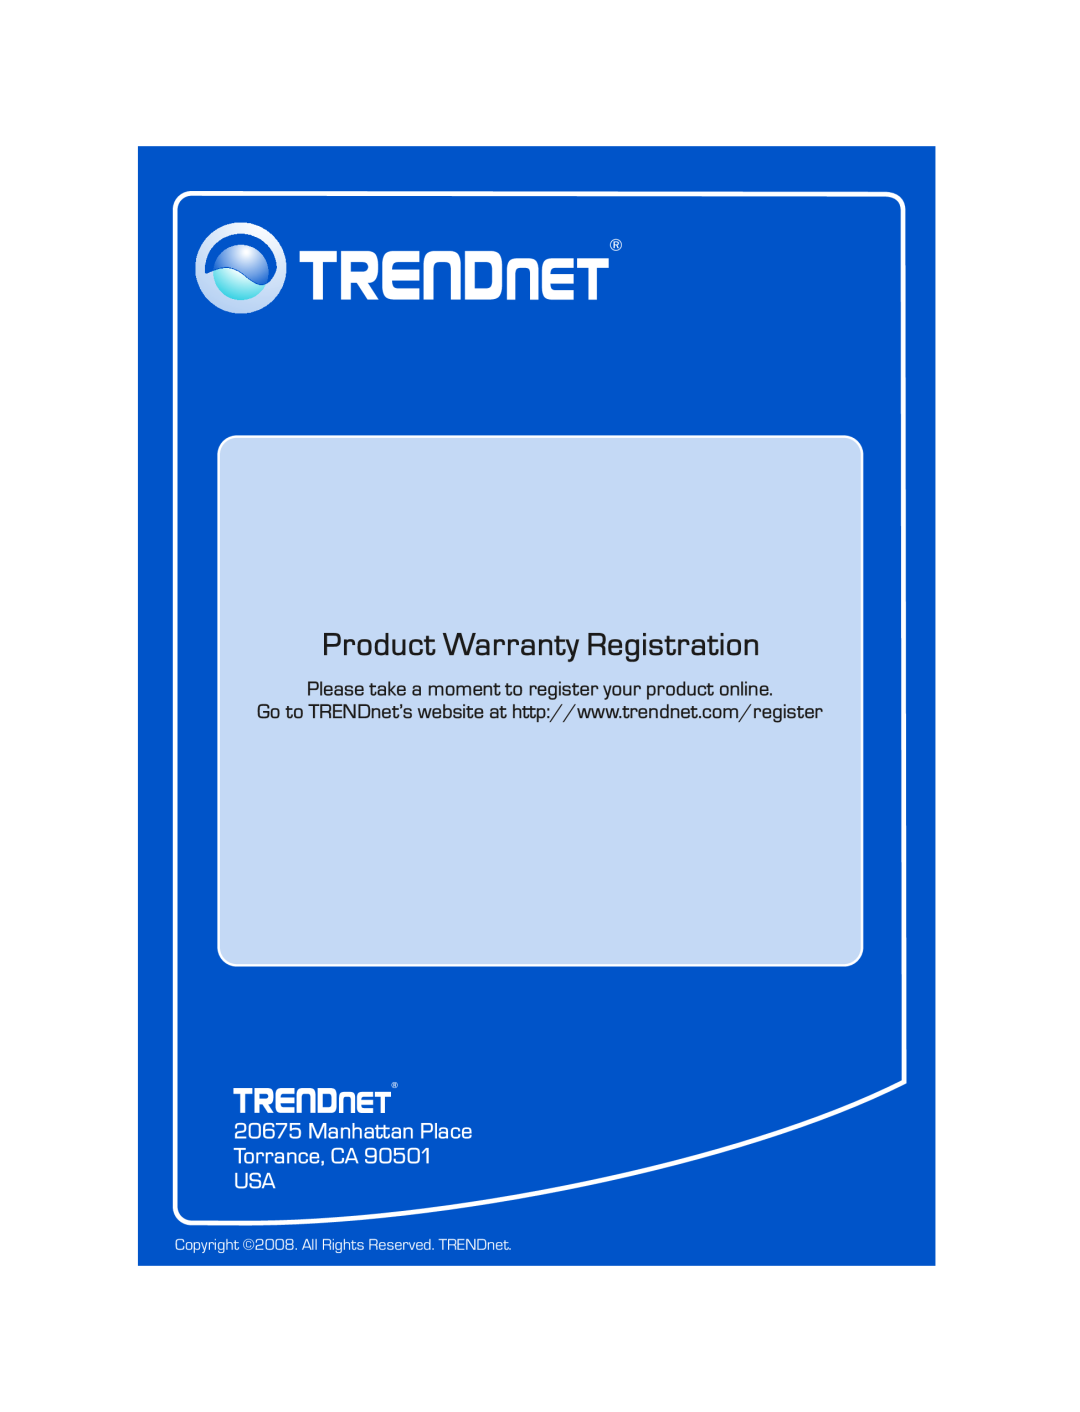 TRENDnet TEGS50G manual Product Warranty Registration, Manhattan Place Torrance, CA USA 